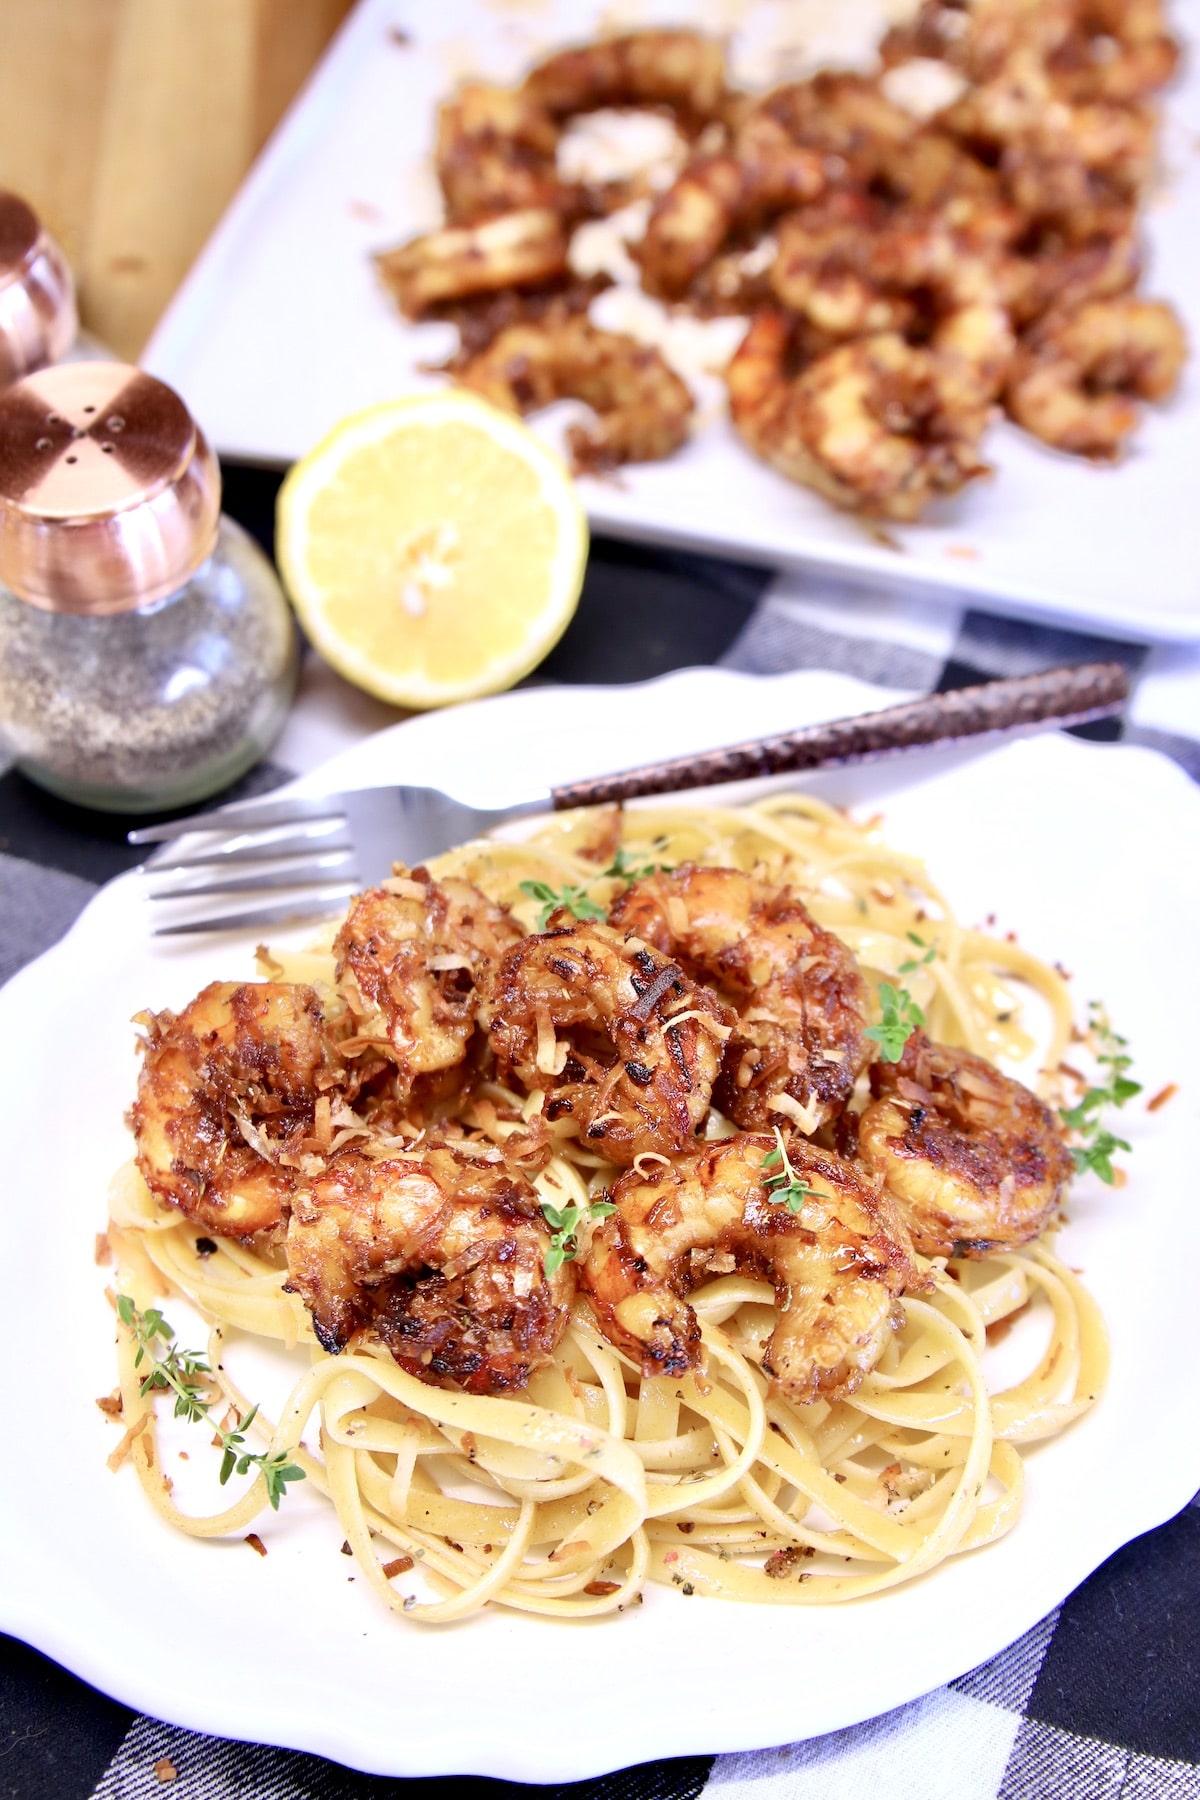 Platter of pasta and shrimp.